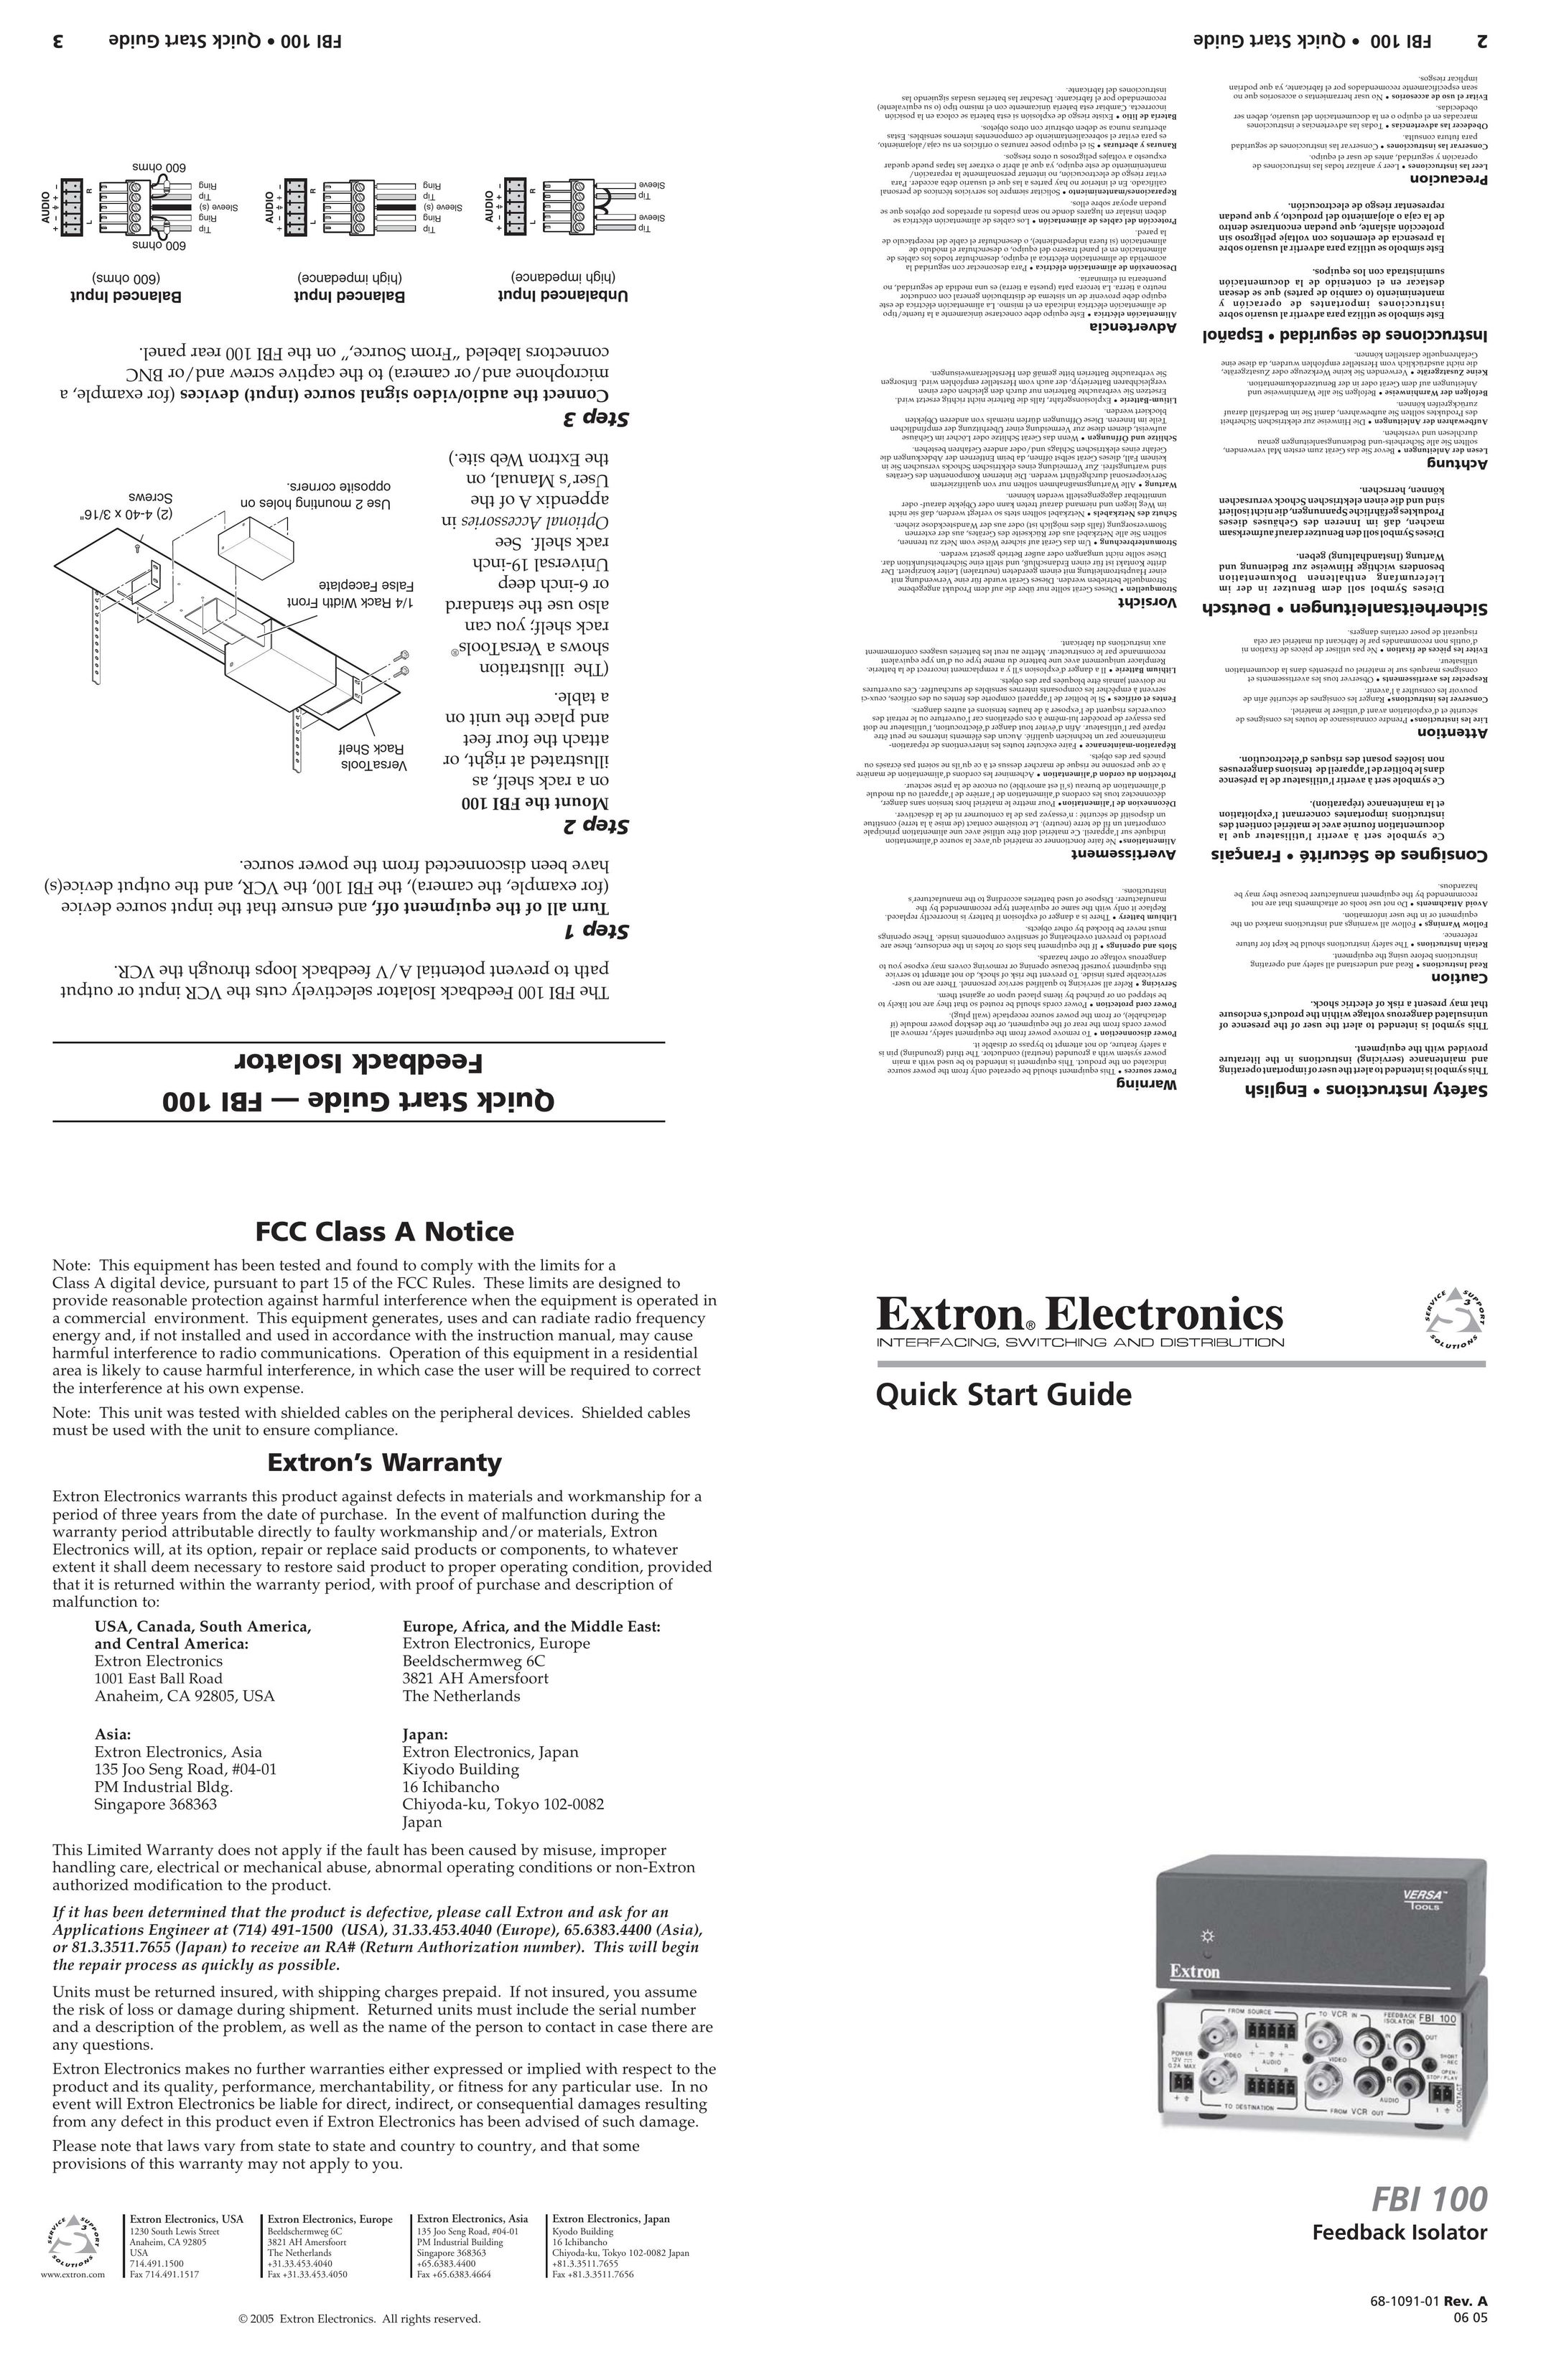 Extron electronic FBI 100 DVD VCR Combo User Manual